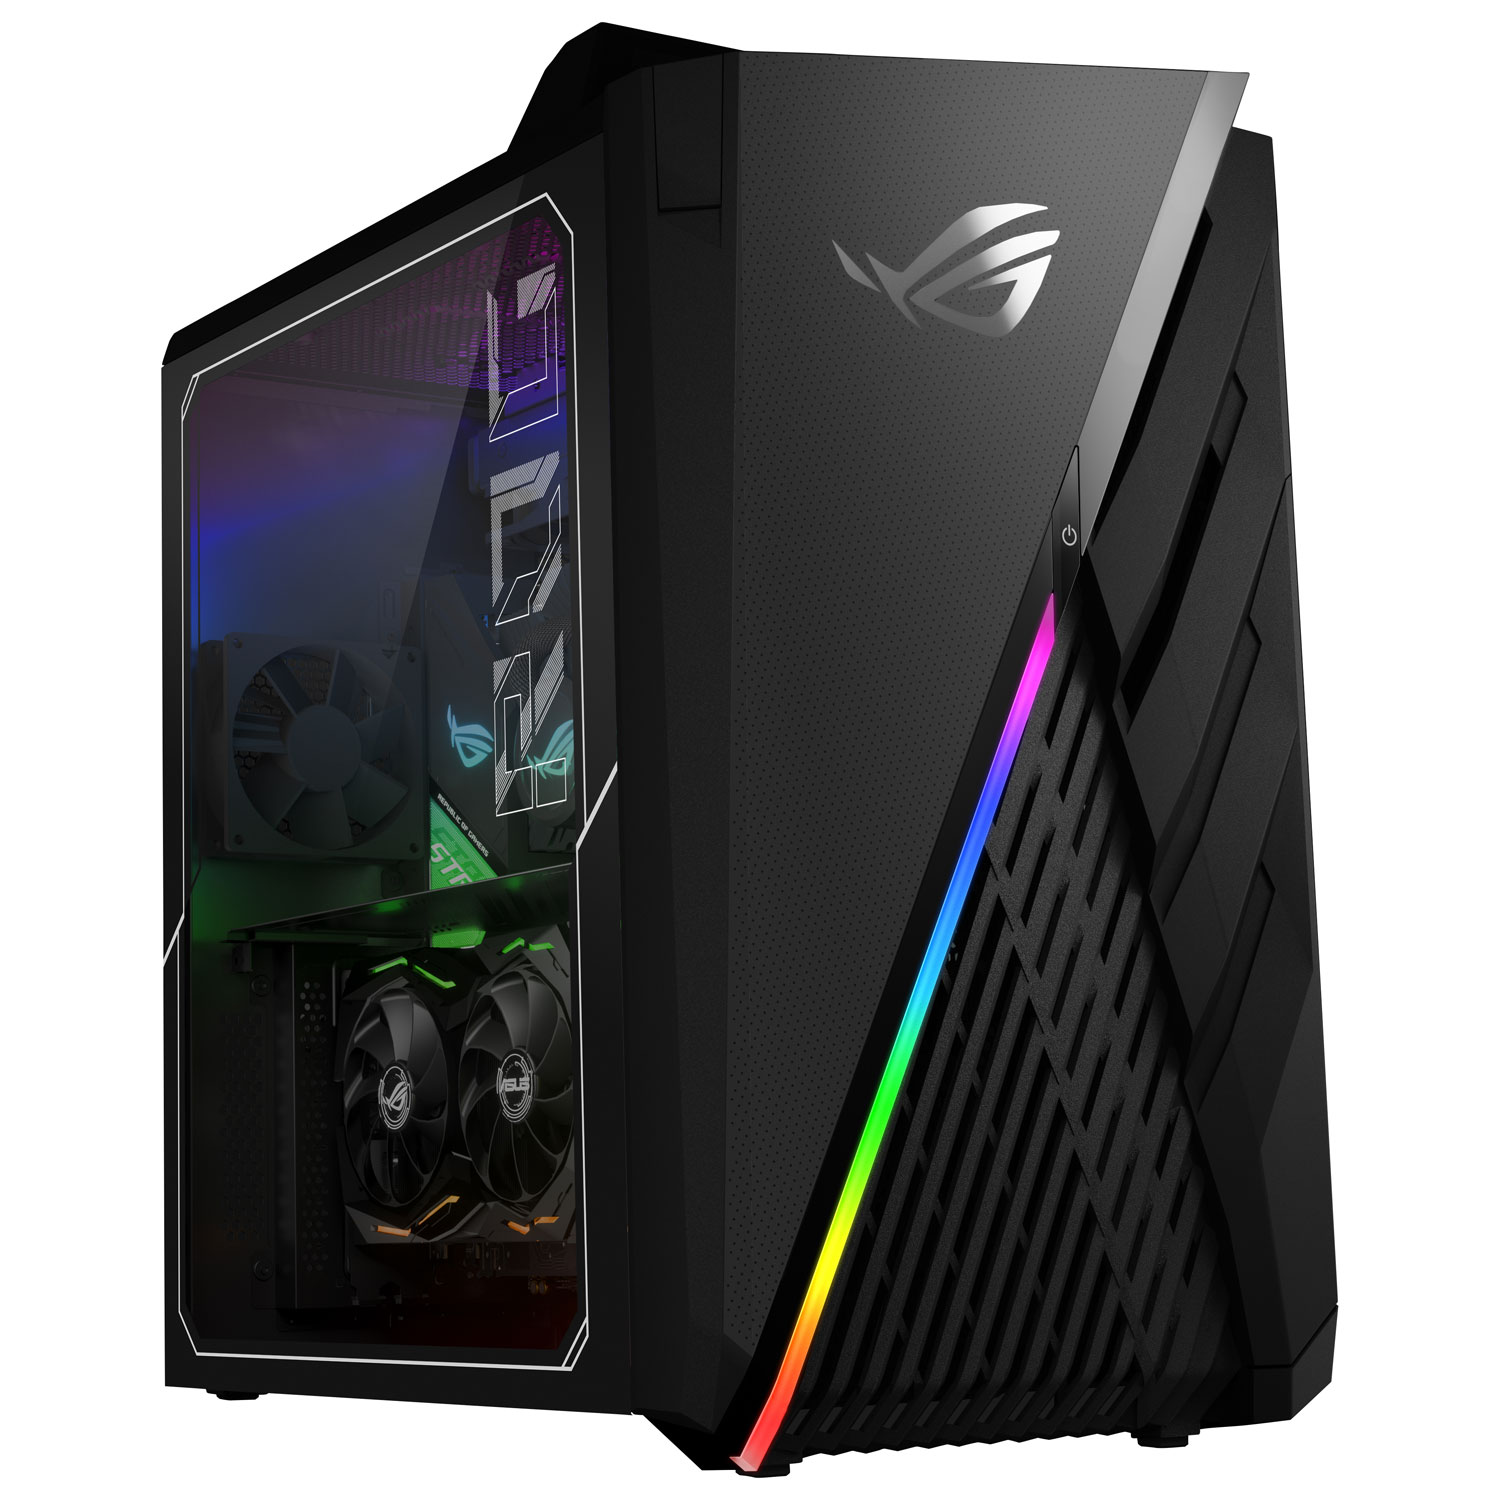 ASUS ROG Strix GA35 Gaming PC -Star Black (AMD Ryzen 7 5800X/1TB HDD/1TB SSD/16GB RAM/GeForce RTX3080)